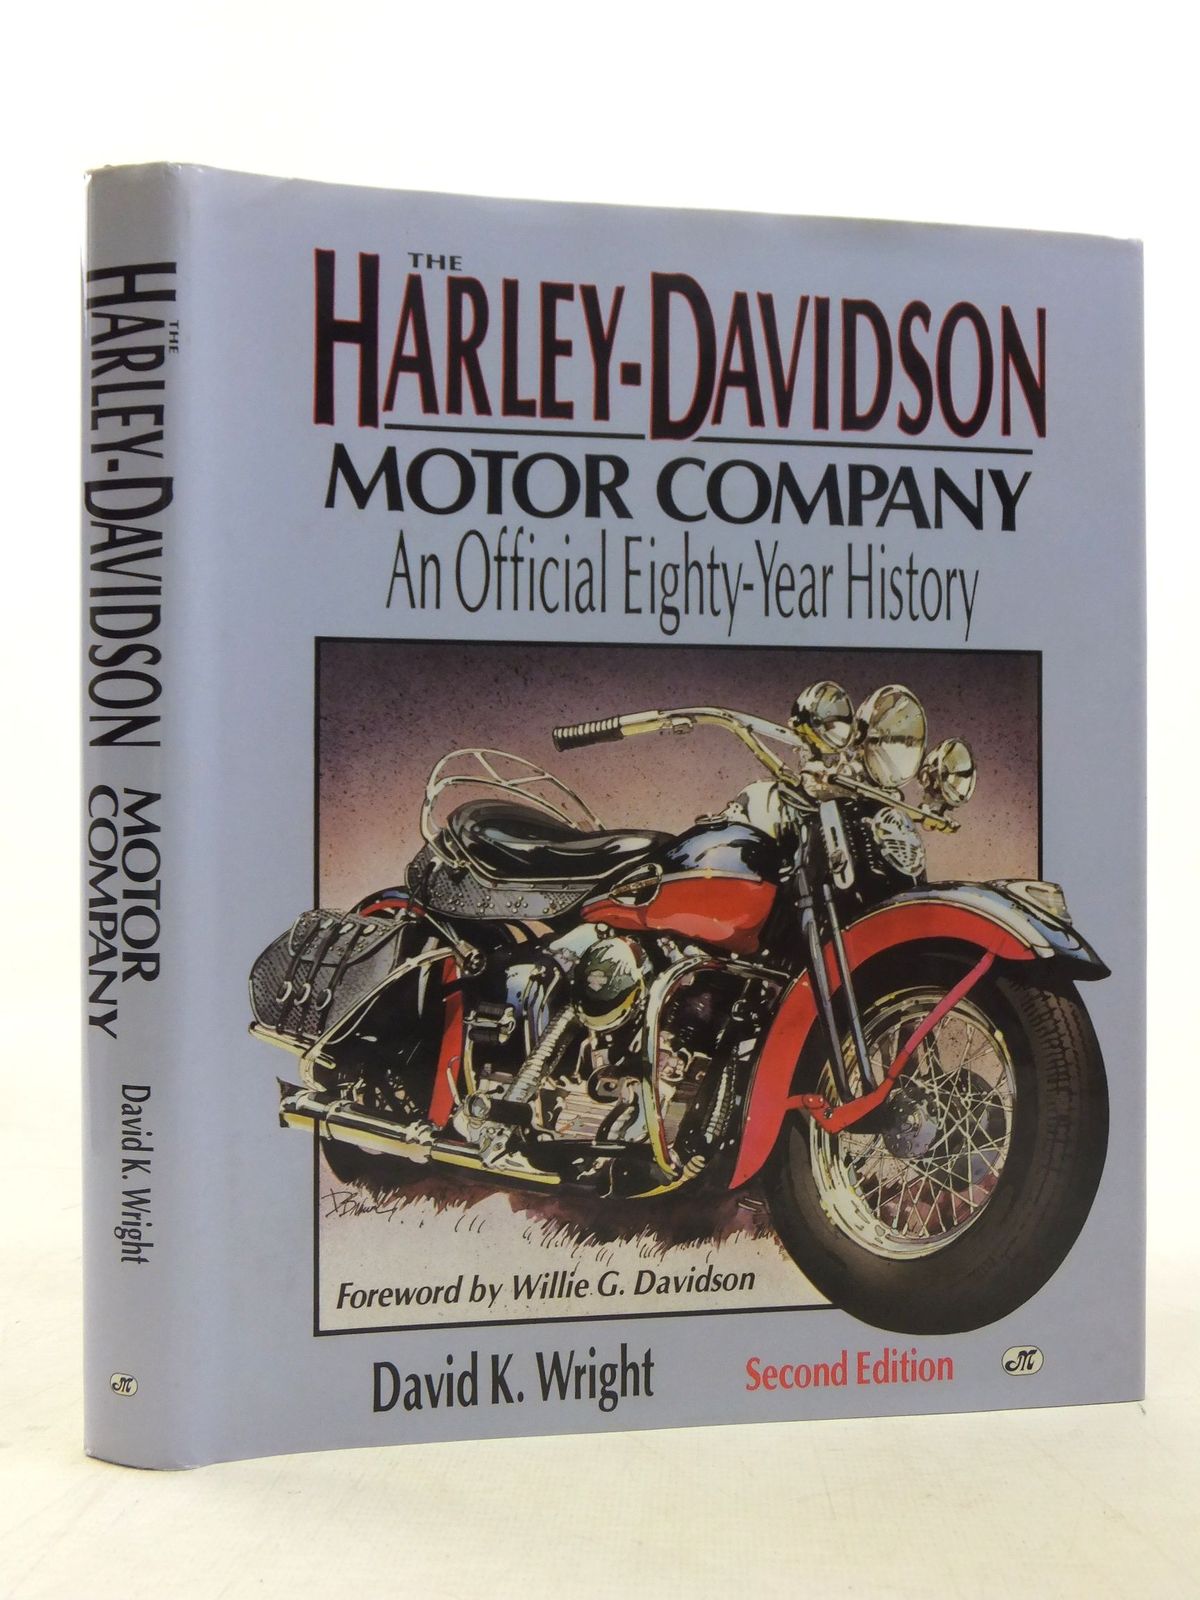 brief history of harley davidson company